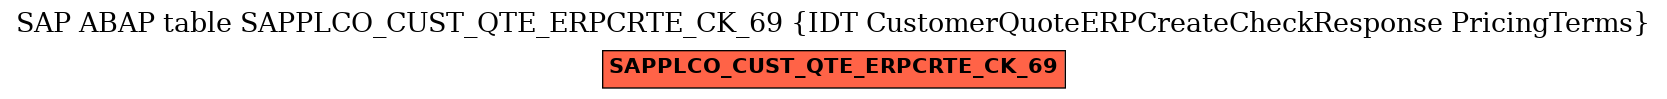 E-R Diagram for table SAPPLCO_CUST_QTE_ERPCRTE_CK_69 (IDT CustomerQuoteERPCreateCheckResponse PricingTerms)